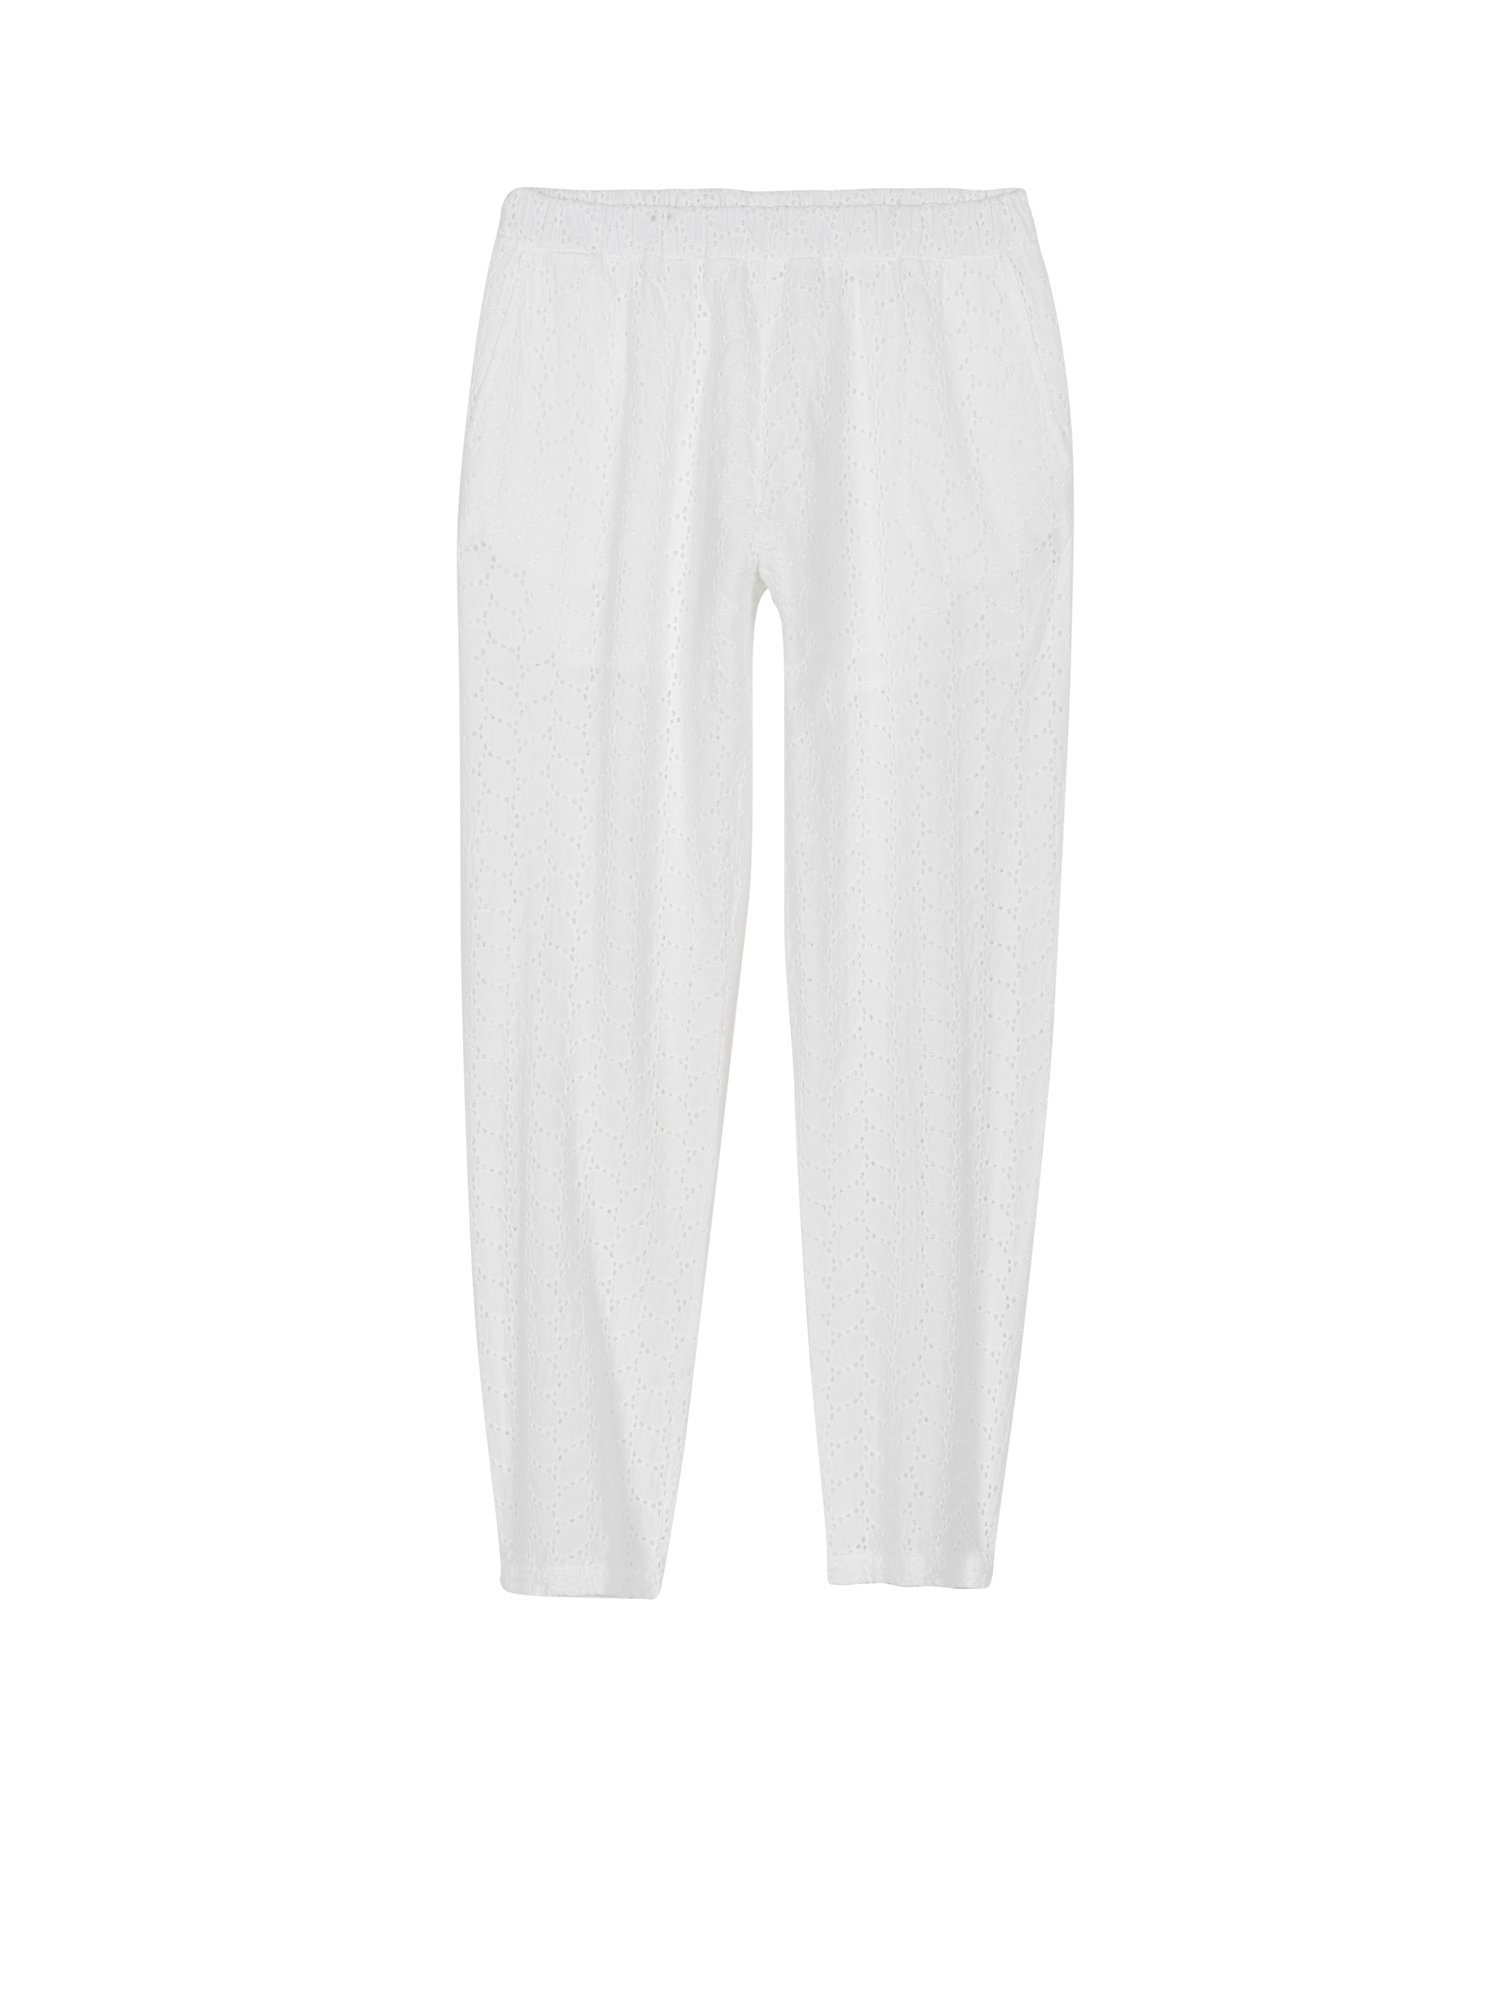 Image of Pantalon broderie anglaise LARA 120€-50%